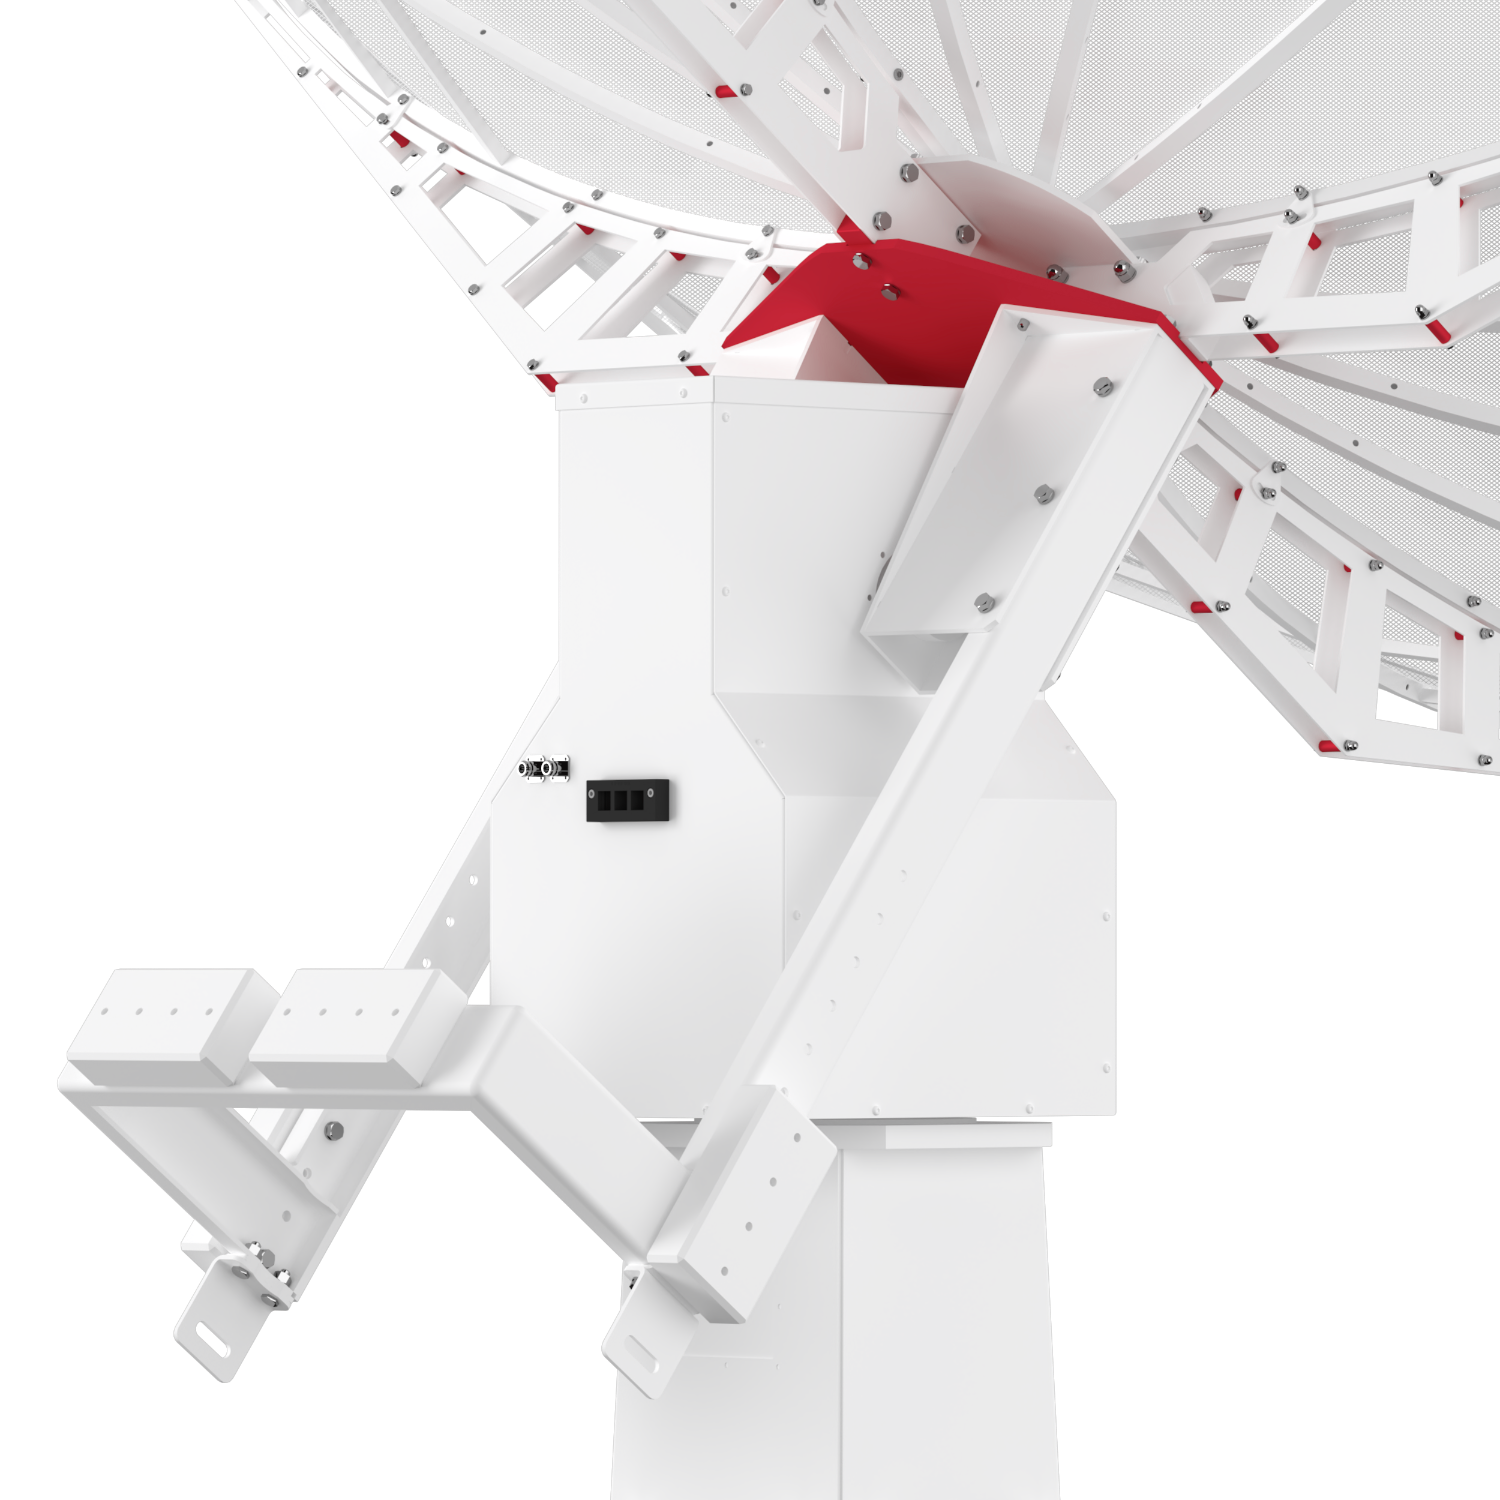 SPIDER 300A MarkII 3.0 meter diameter advanced radio telescope for radio astronomy: GS-100II weatherproof antenna tracking system